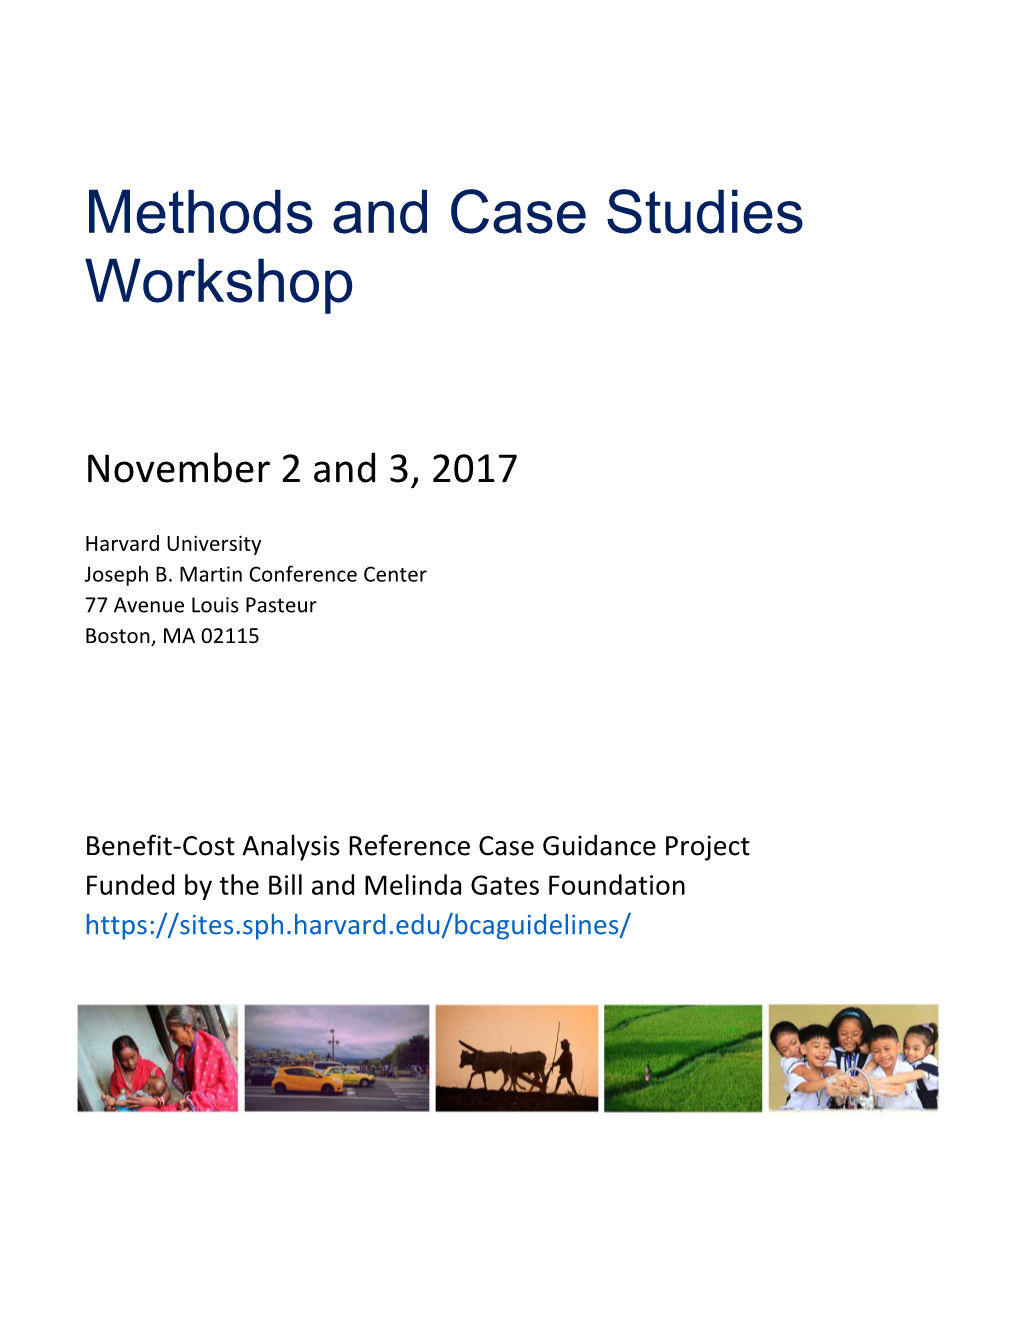 Methods and Case Studies Workshop